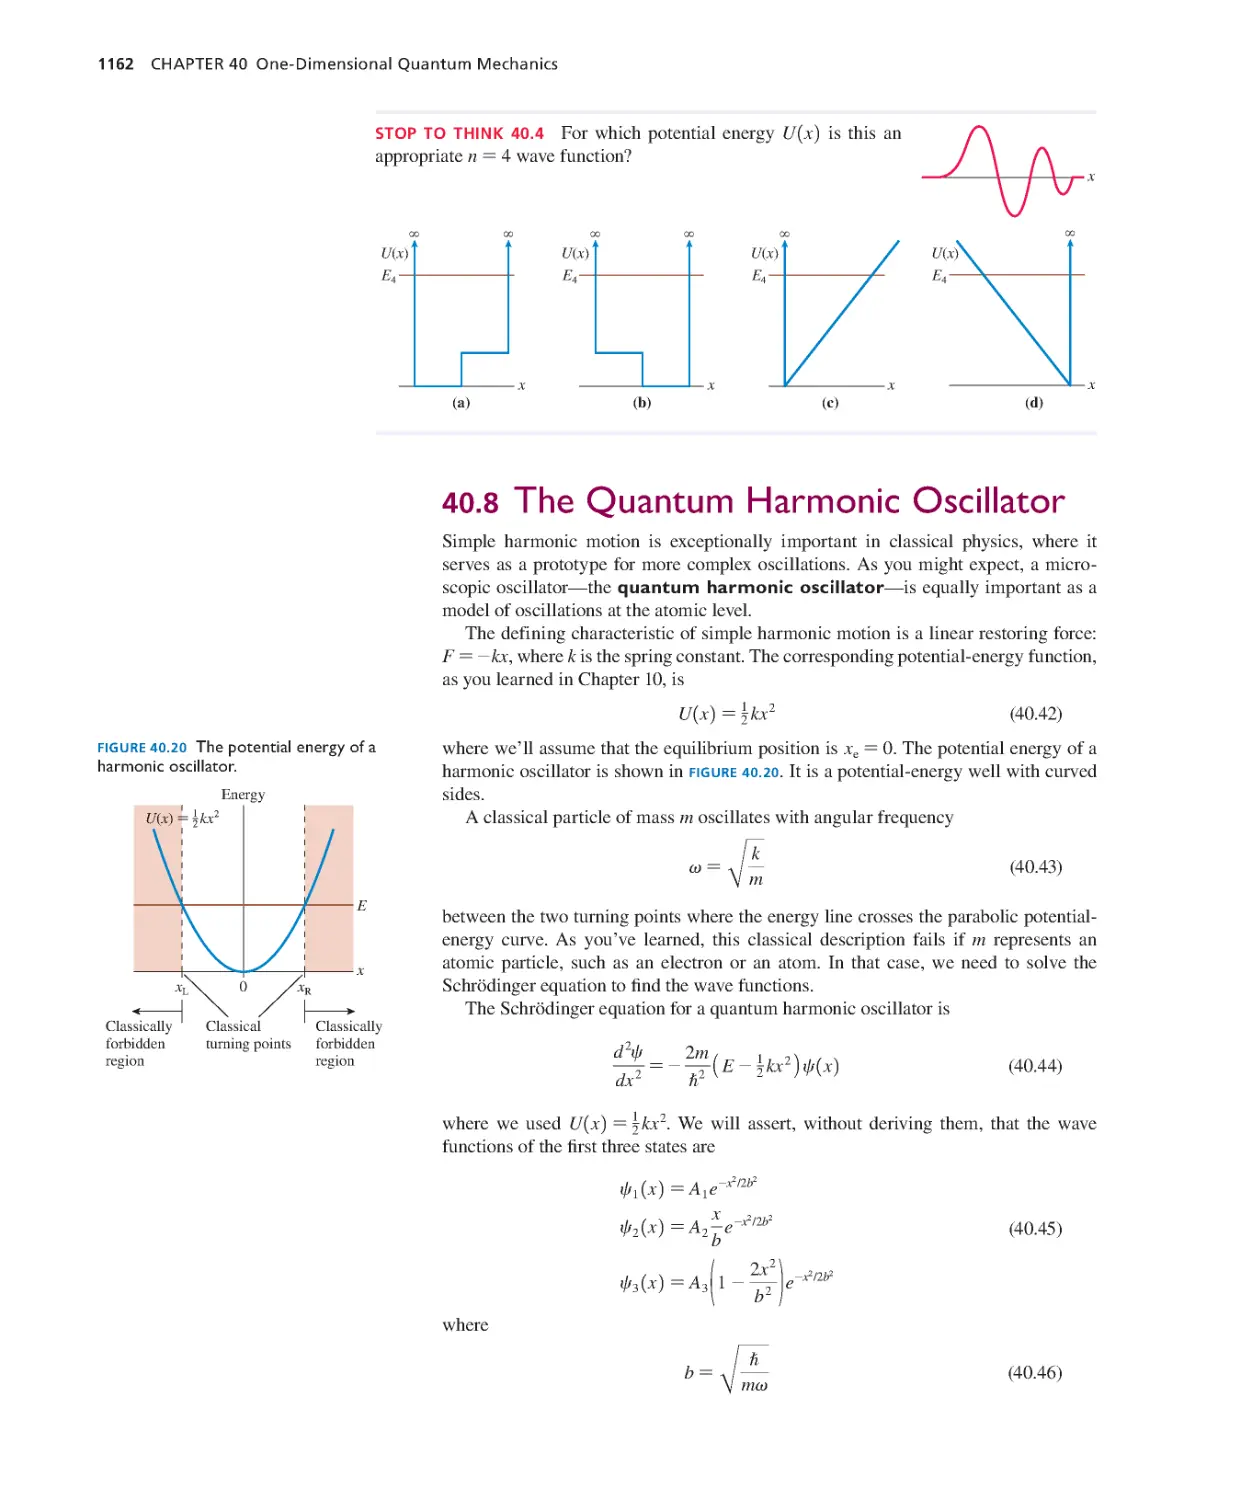 40.8. The Quantum Harmonic Oscillator